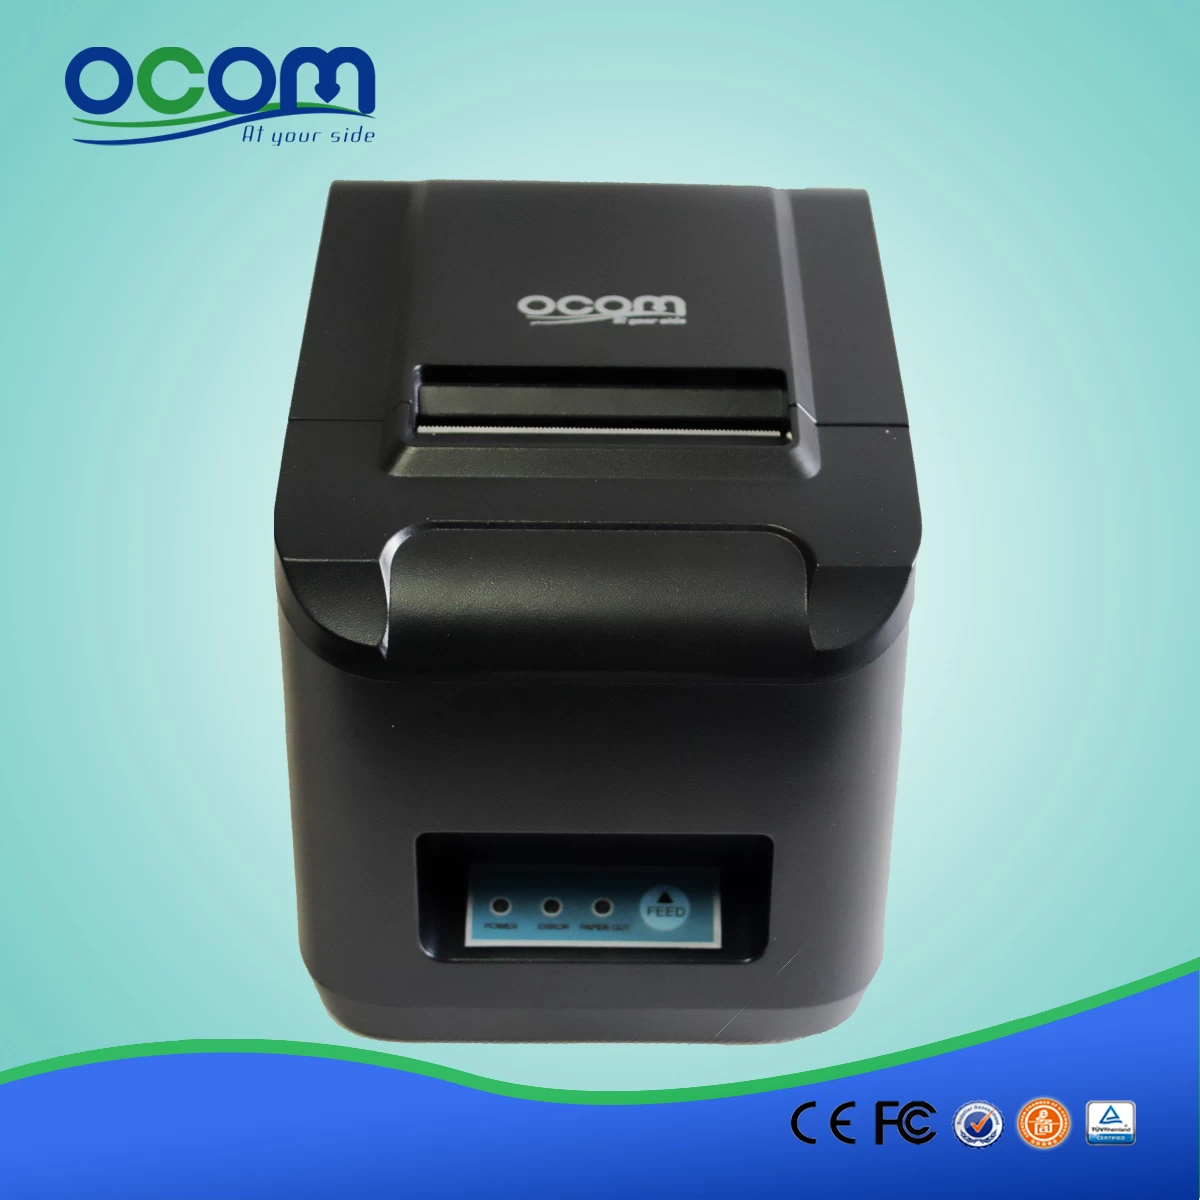 High quality 80mm POS receipt printer-OCPP-808-URL